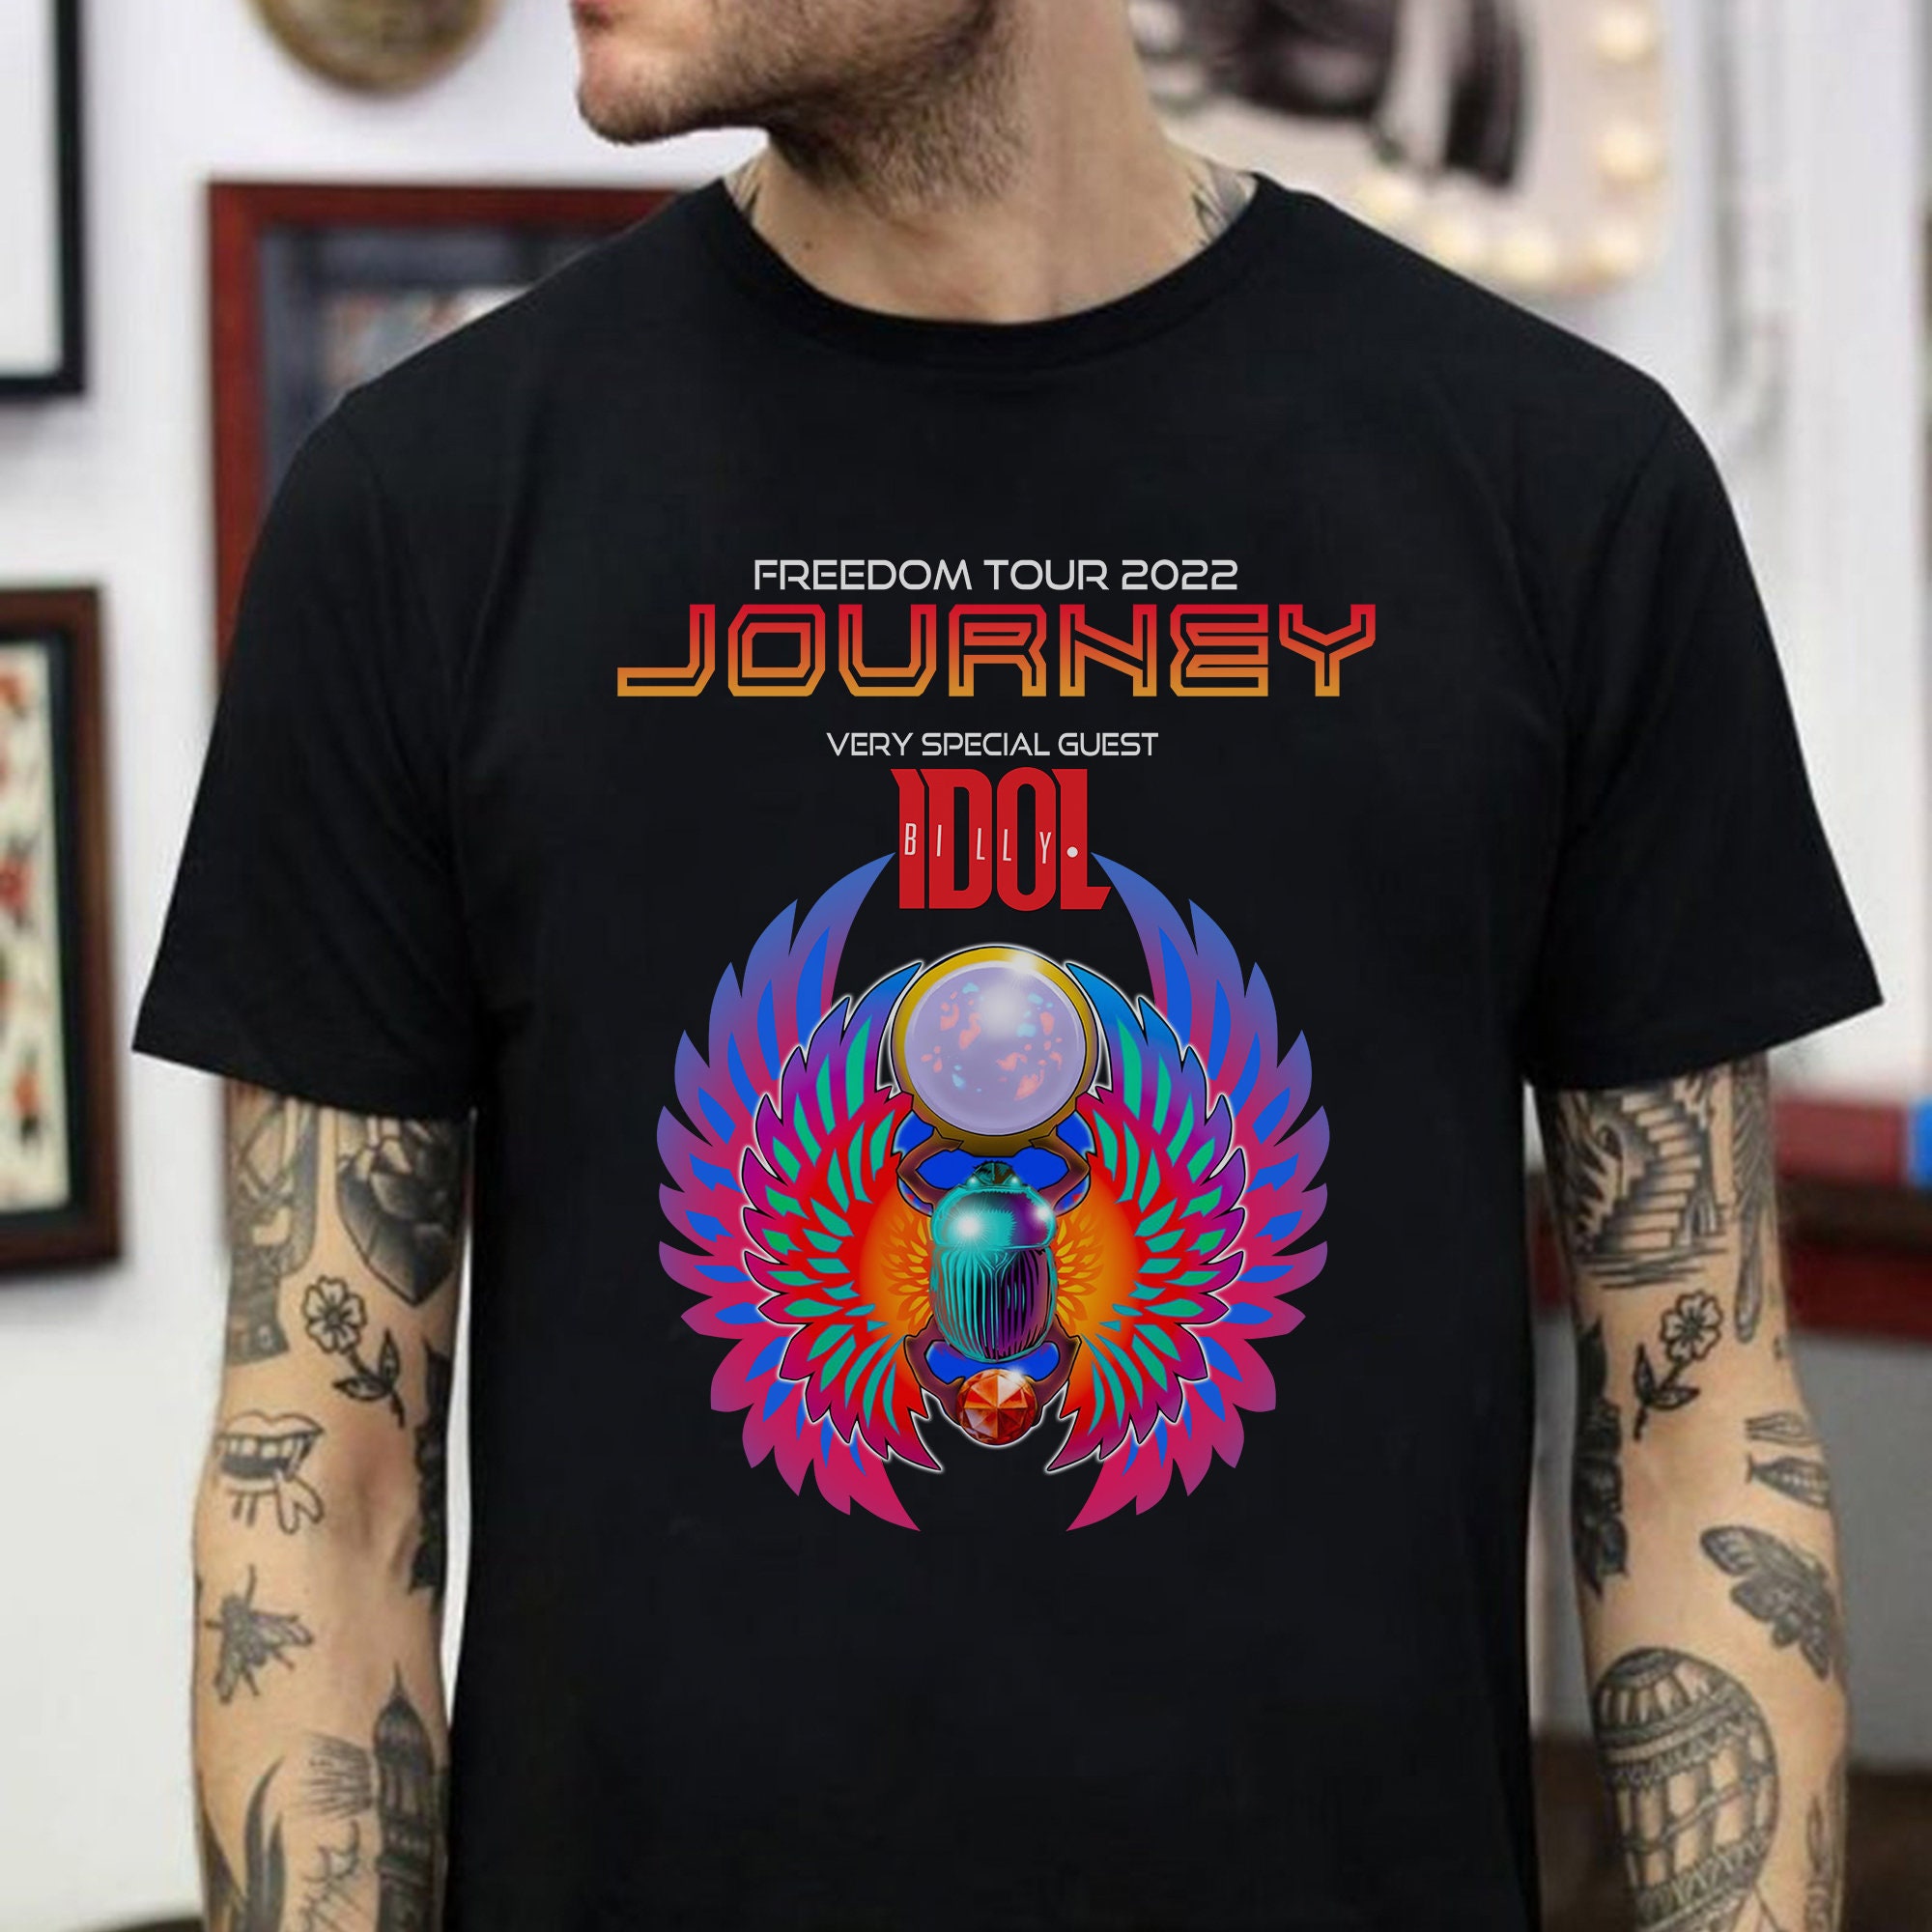 journey freedom tour t shirt